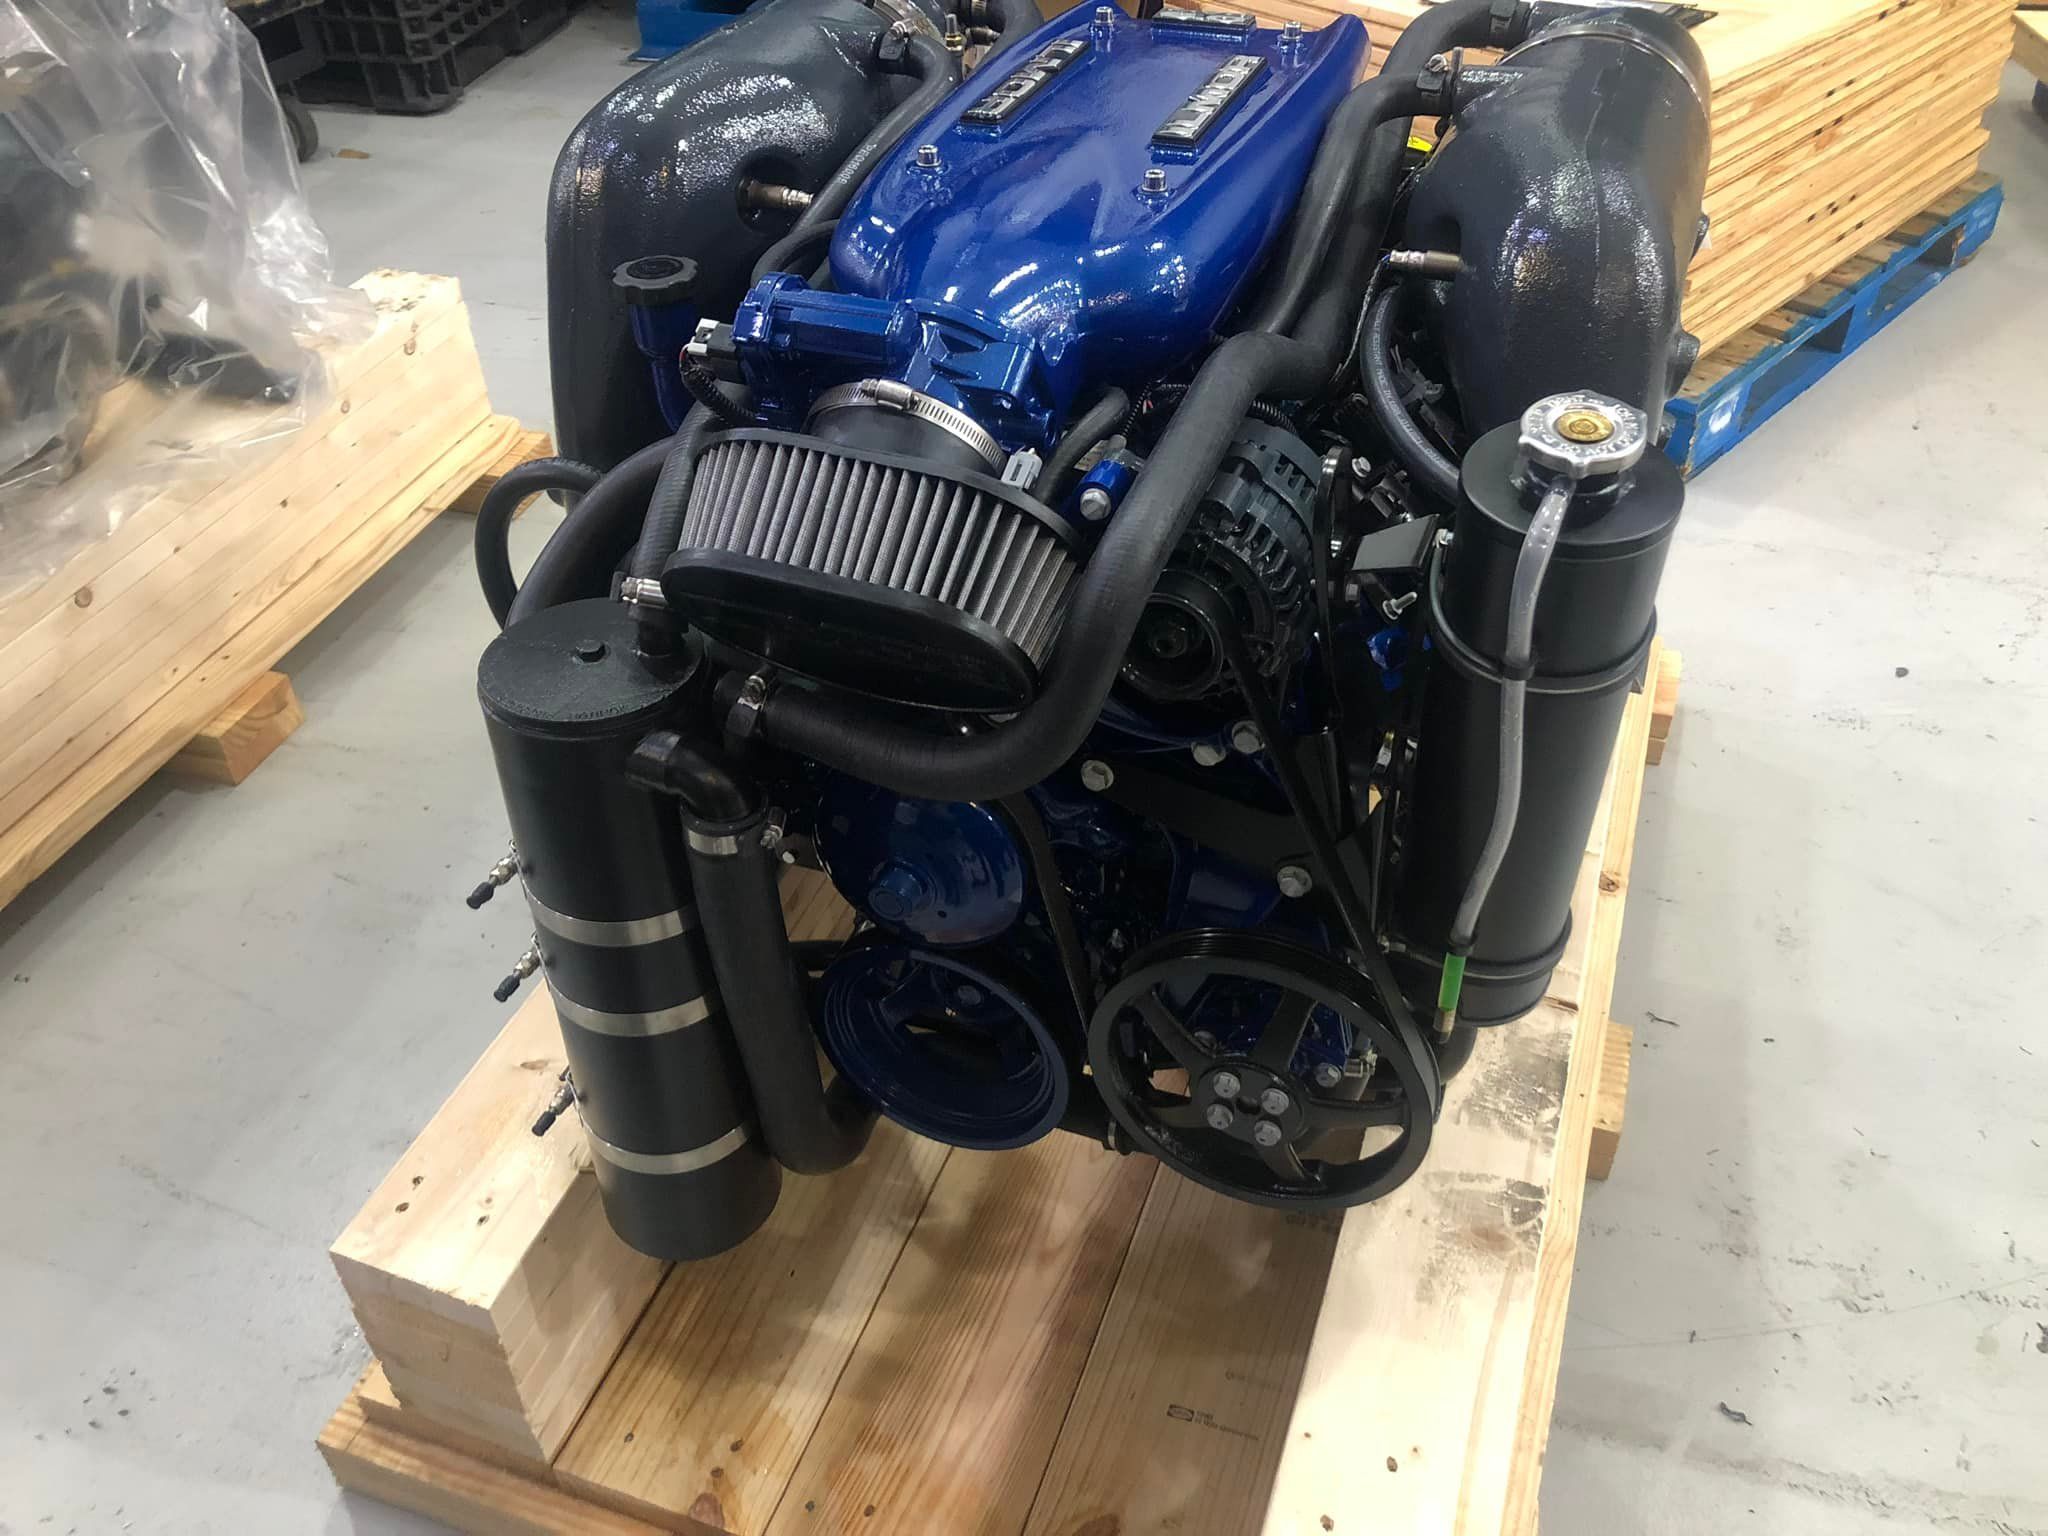 New engine sales and installation for Turner Mobile Marine in Stevensville, MD